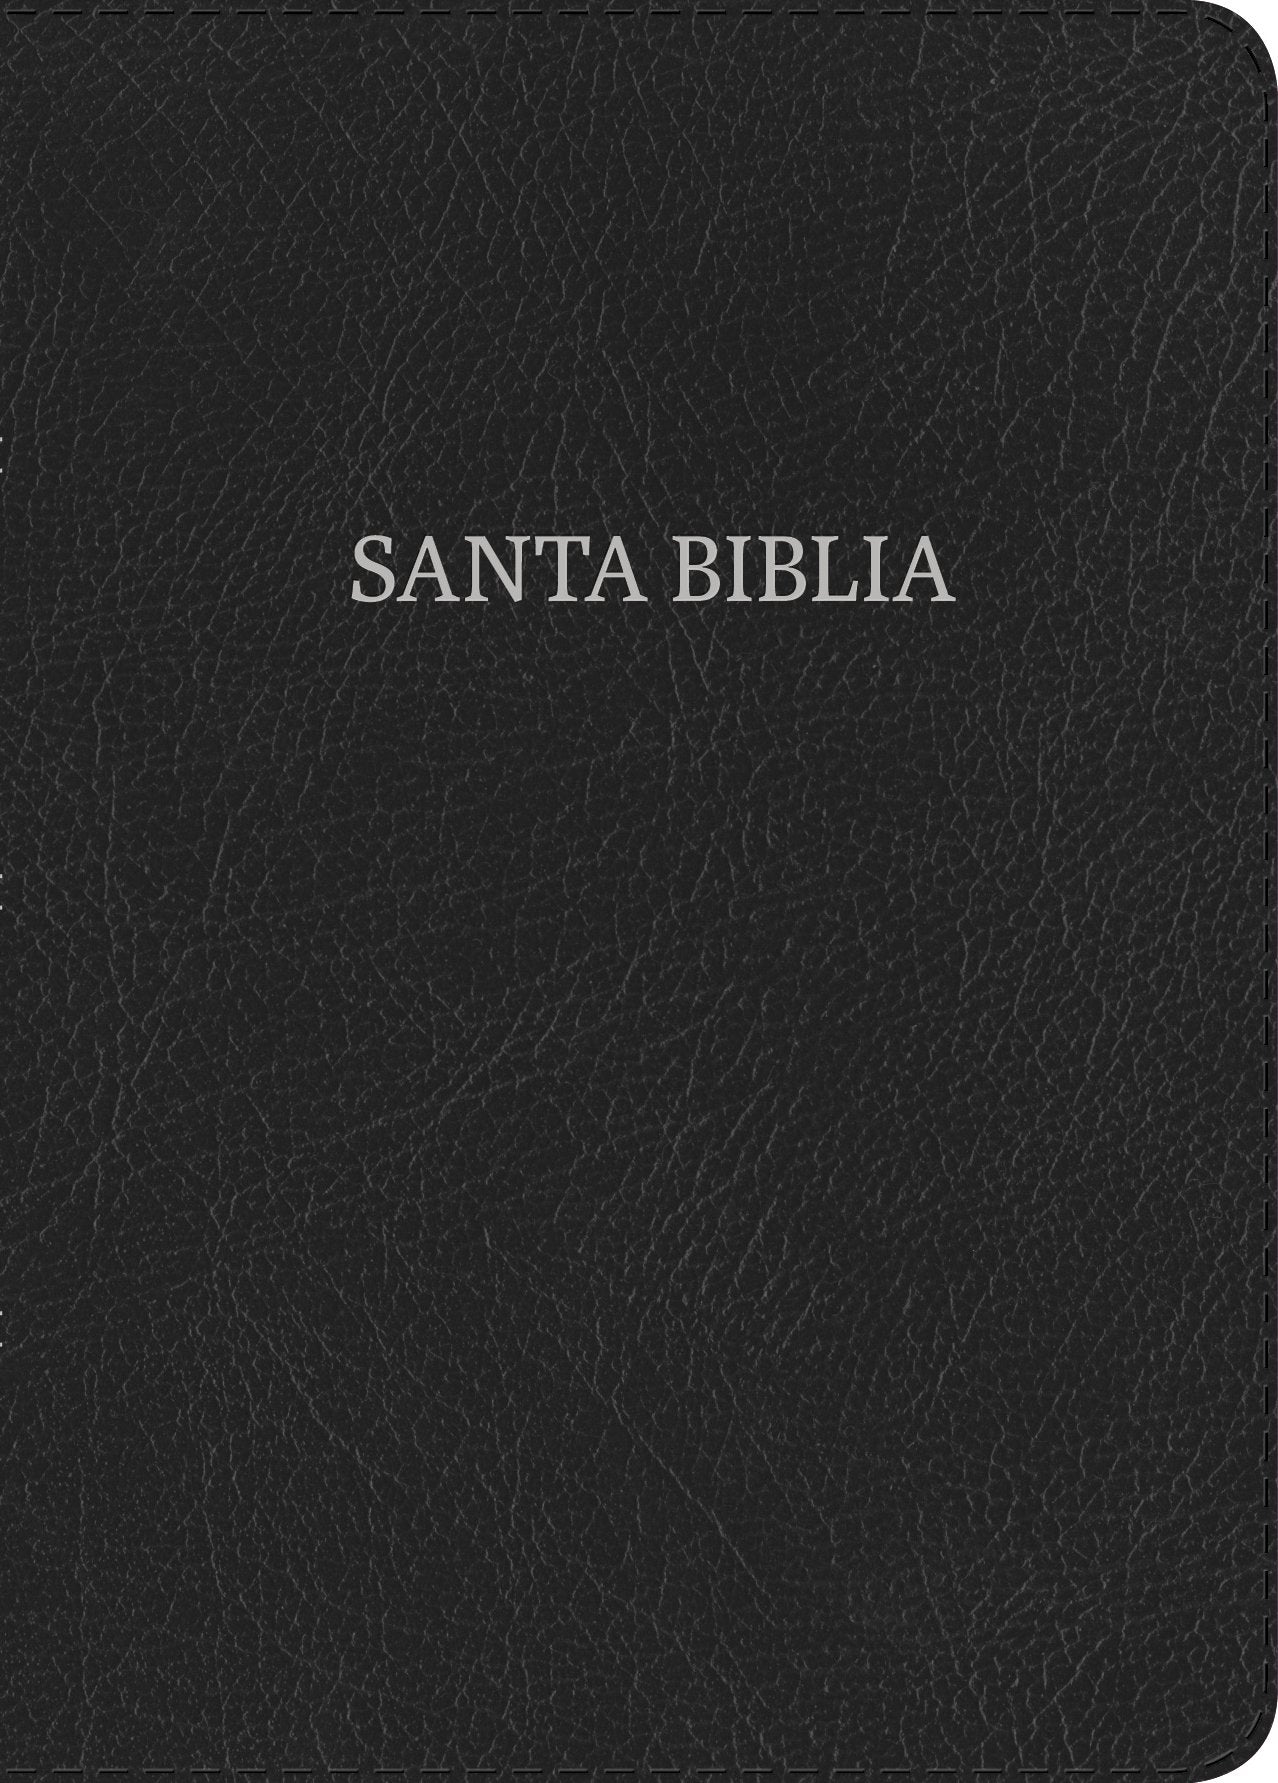 Biblia Reina Valera 1960 Letra Gigante. Piel manufactura, negro / Giant Print Bible RVR 1960. Bonded Leather, Black (Spanish Edition)